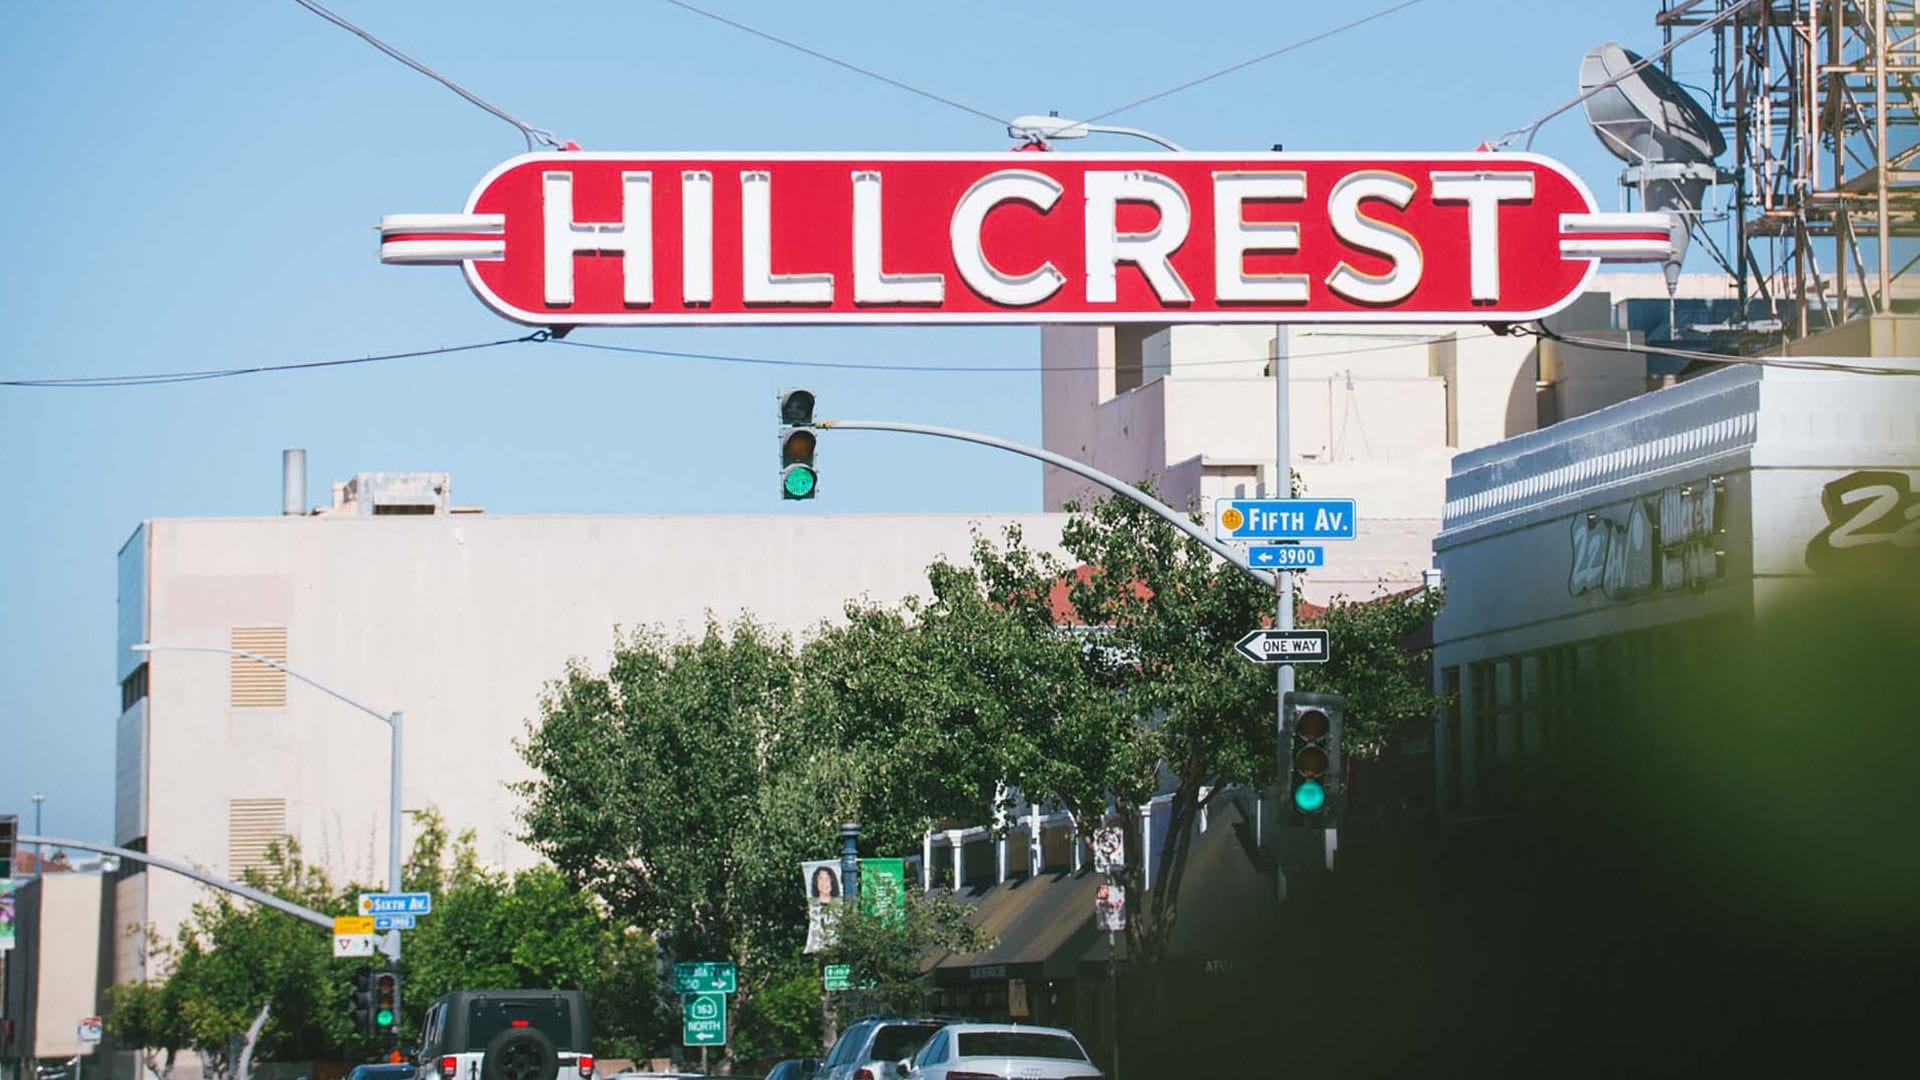 Hillcrest in San Diego, CA